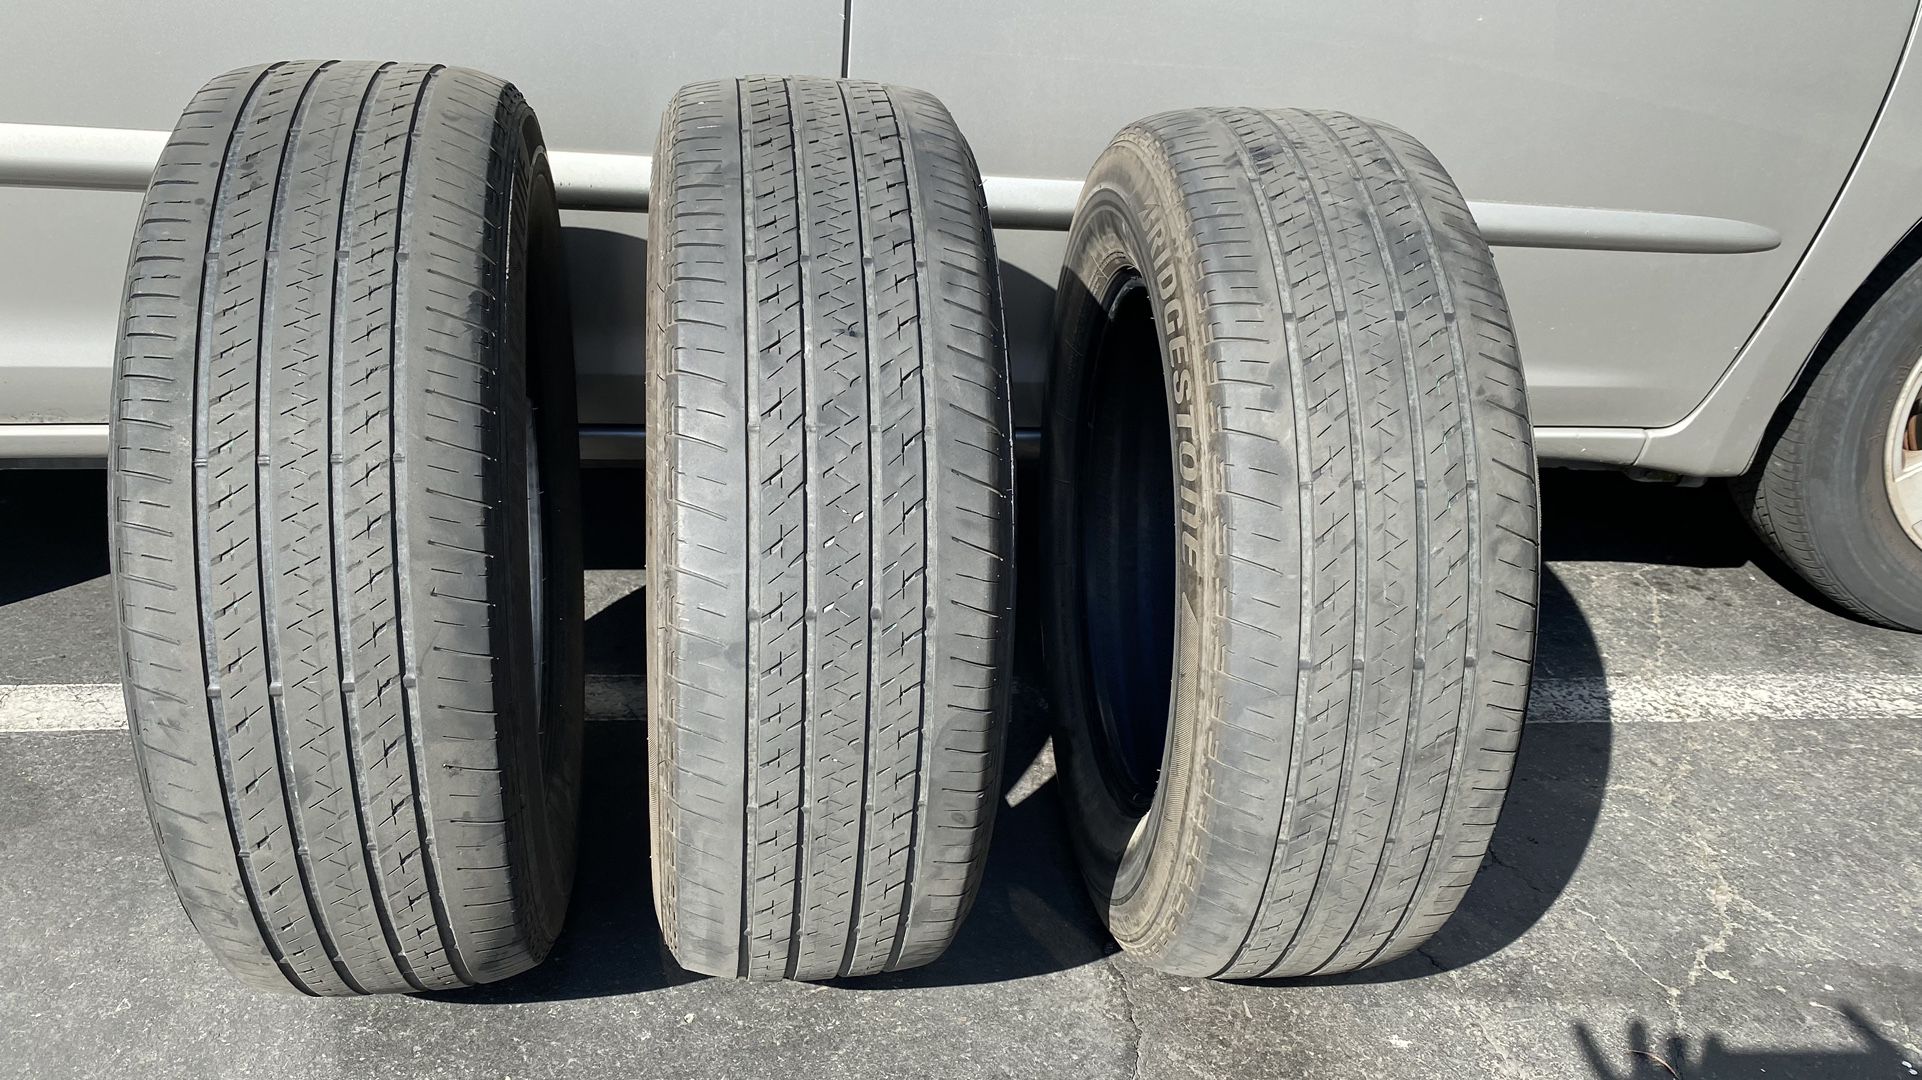 3 Bridgestone Ecopia 235/65R17 Good Tread Tires